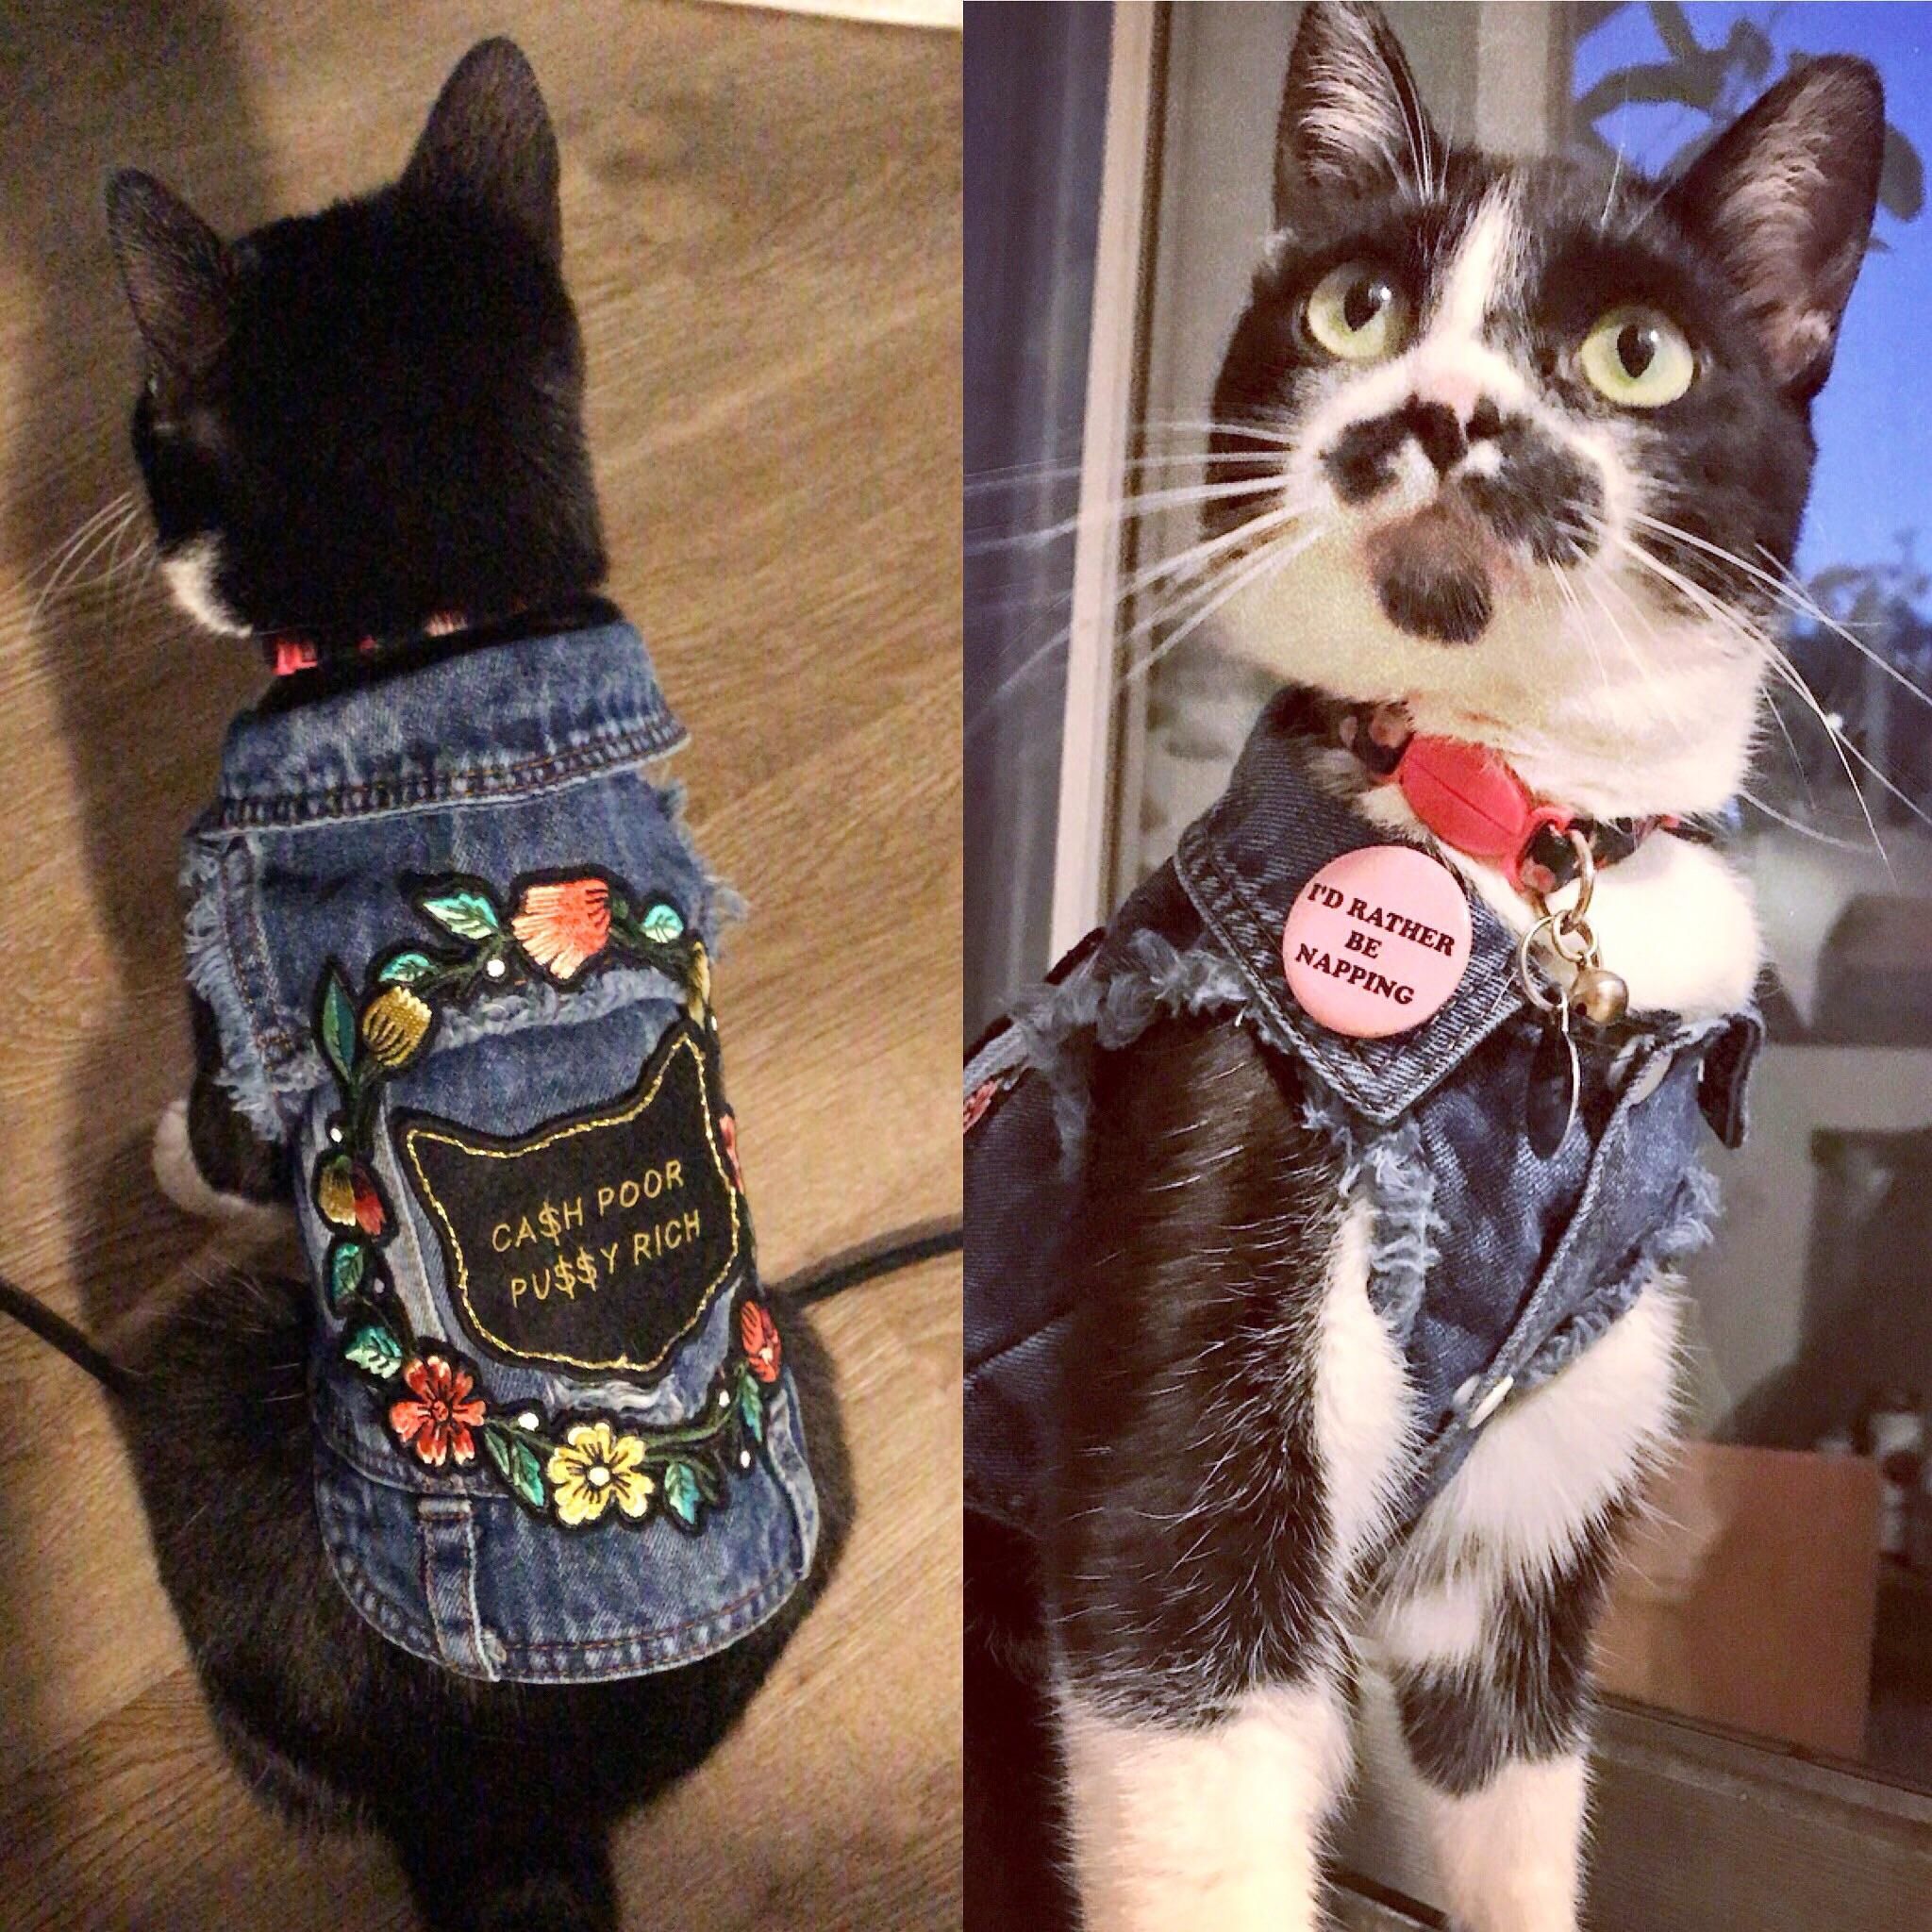 Punk rock kitty.